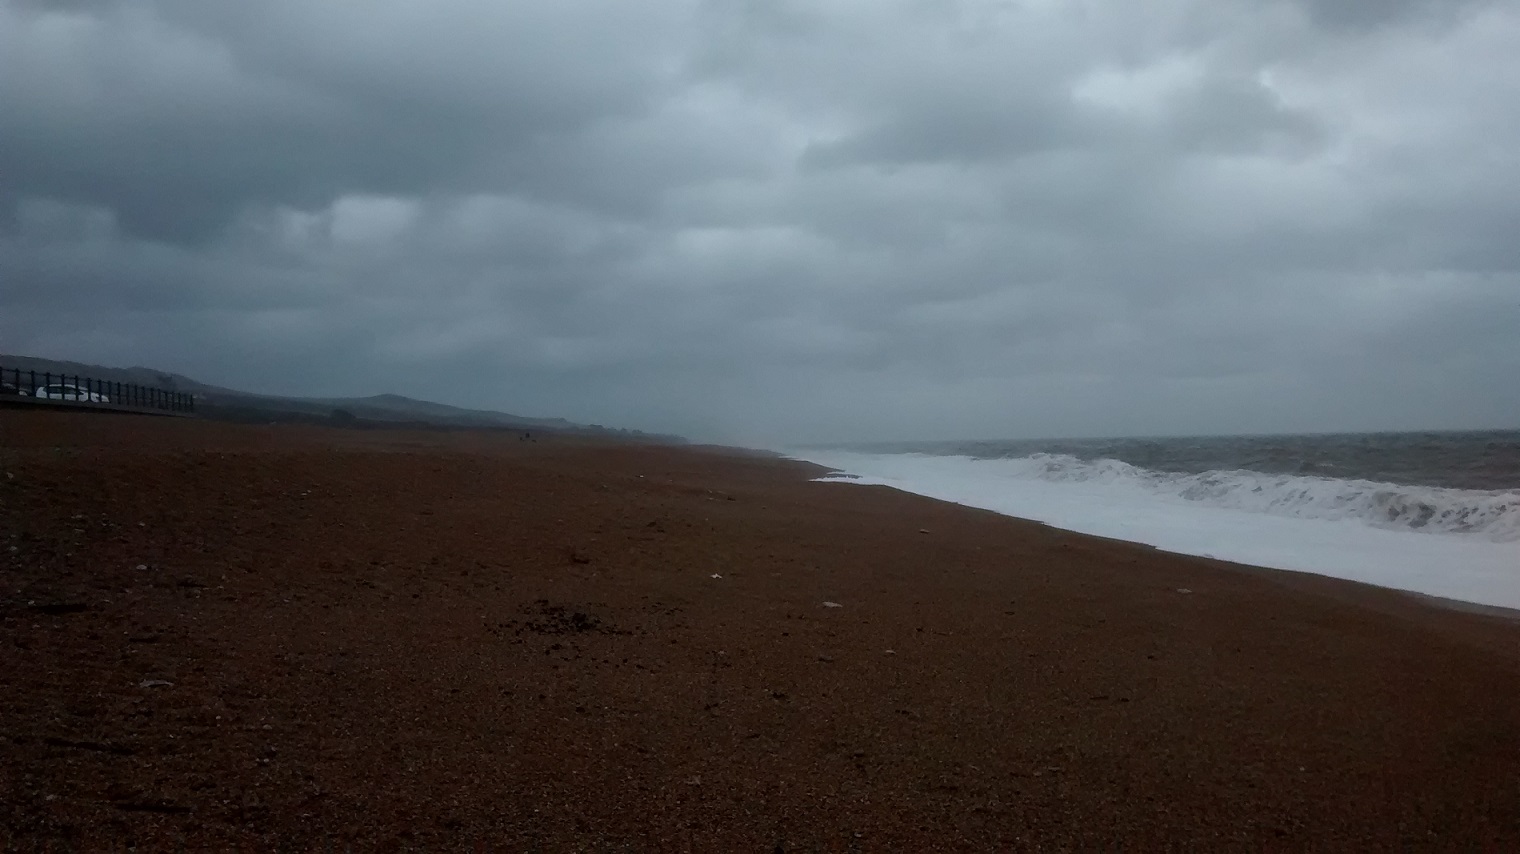 The sea pounds a dark stormy beach under a cloudy sky